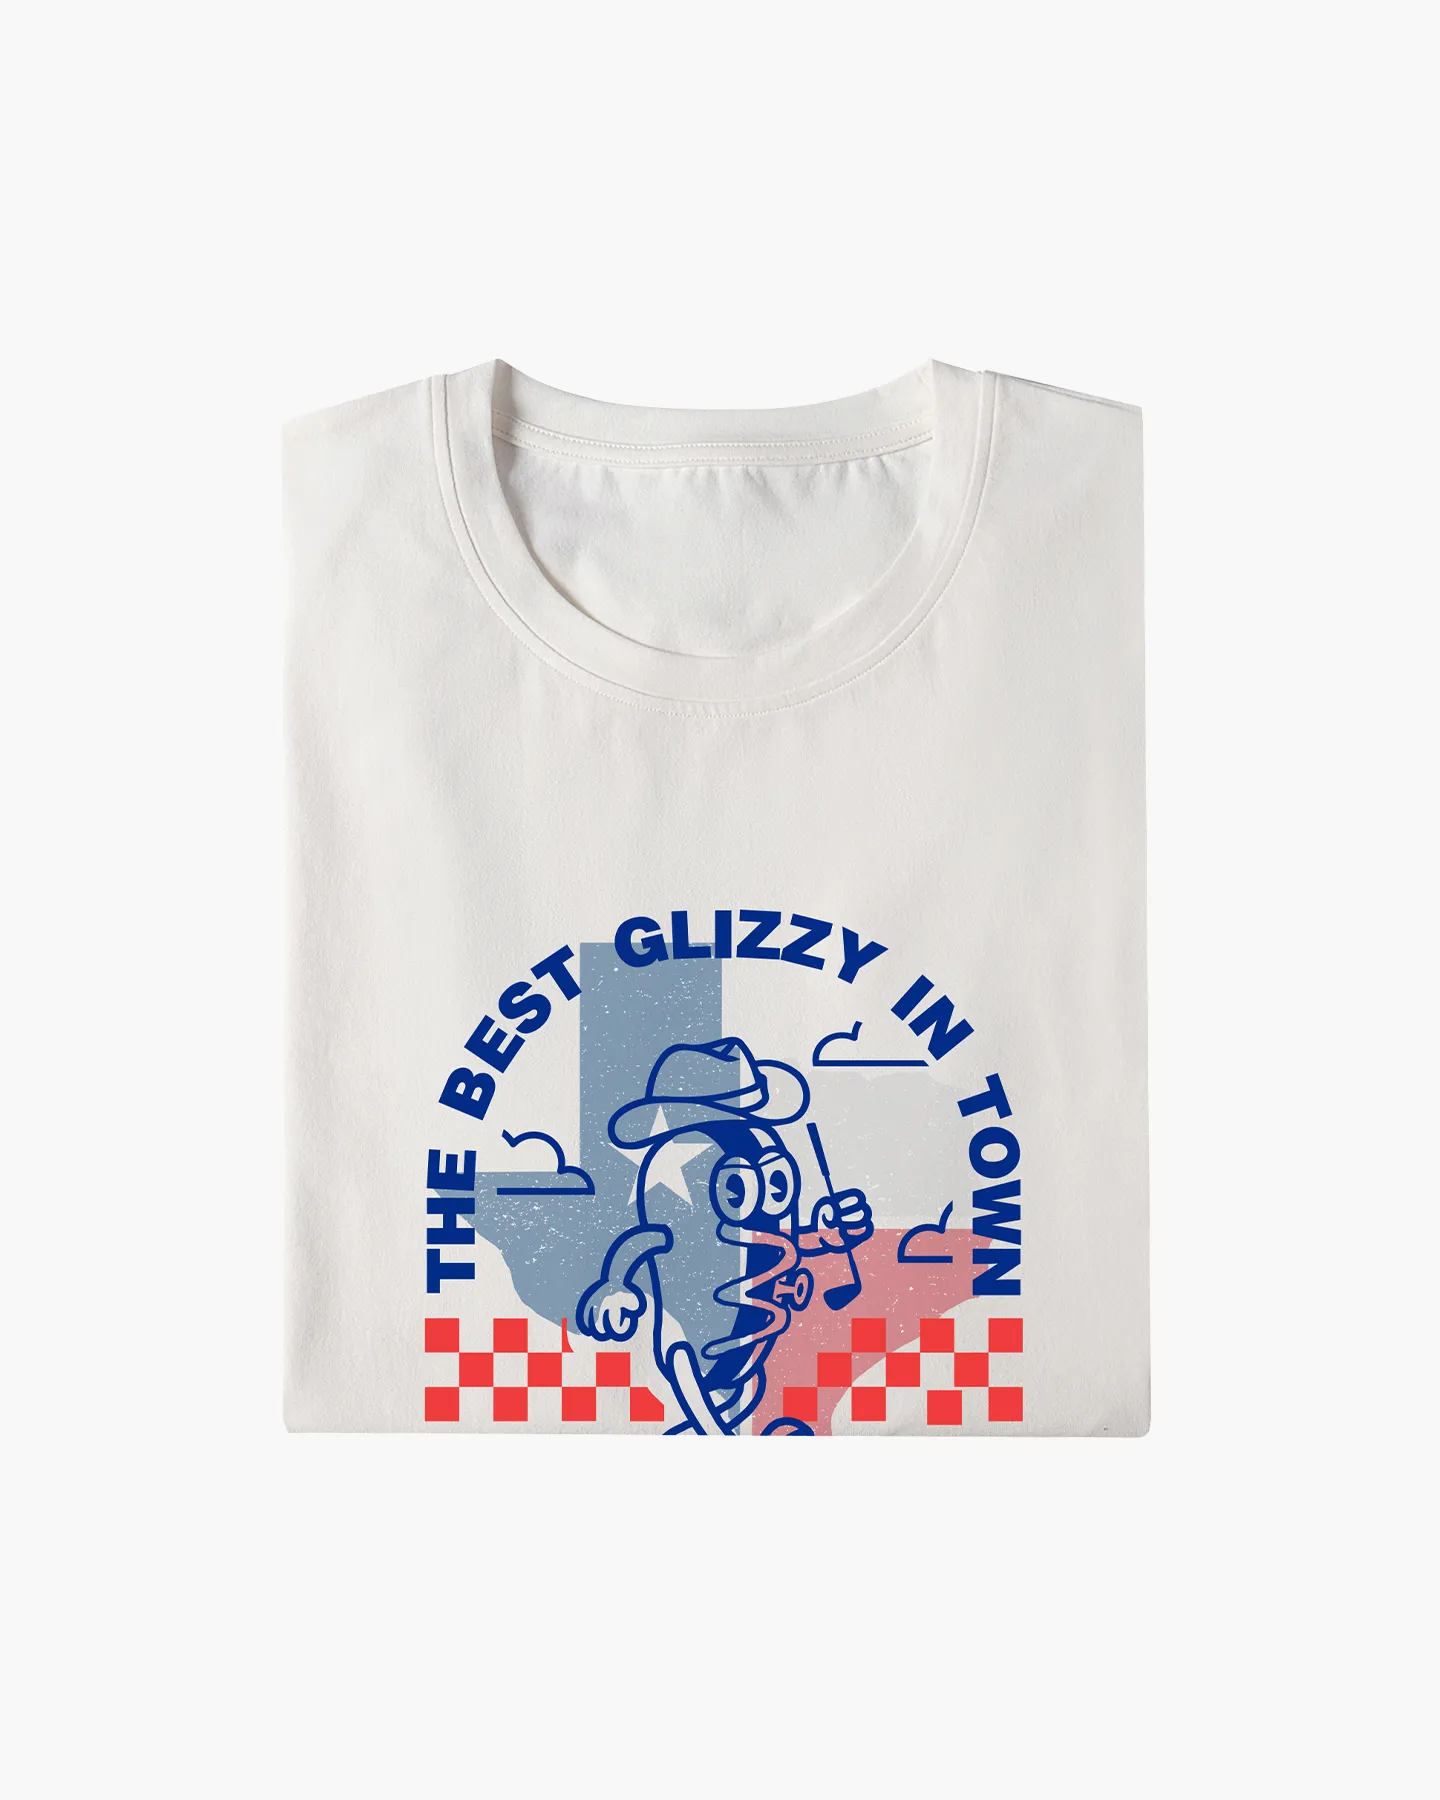 Glizzy Champion T-Shirt - Deolax